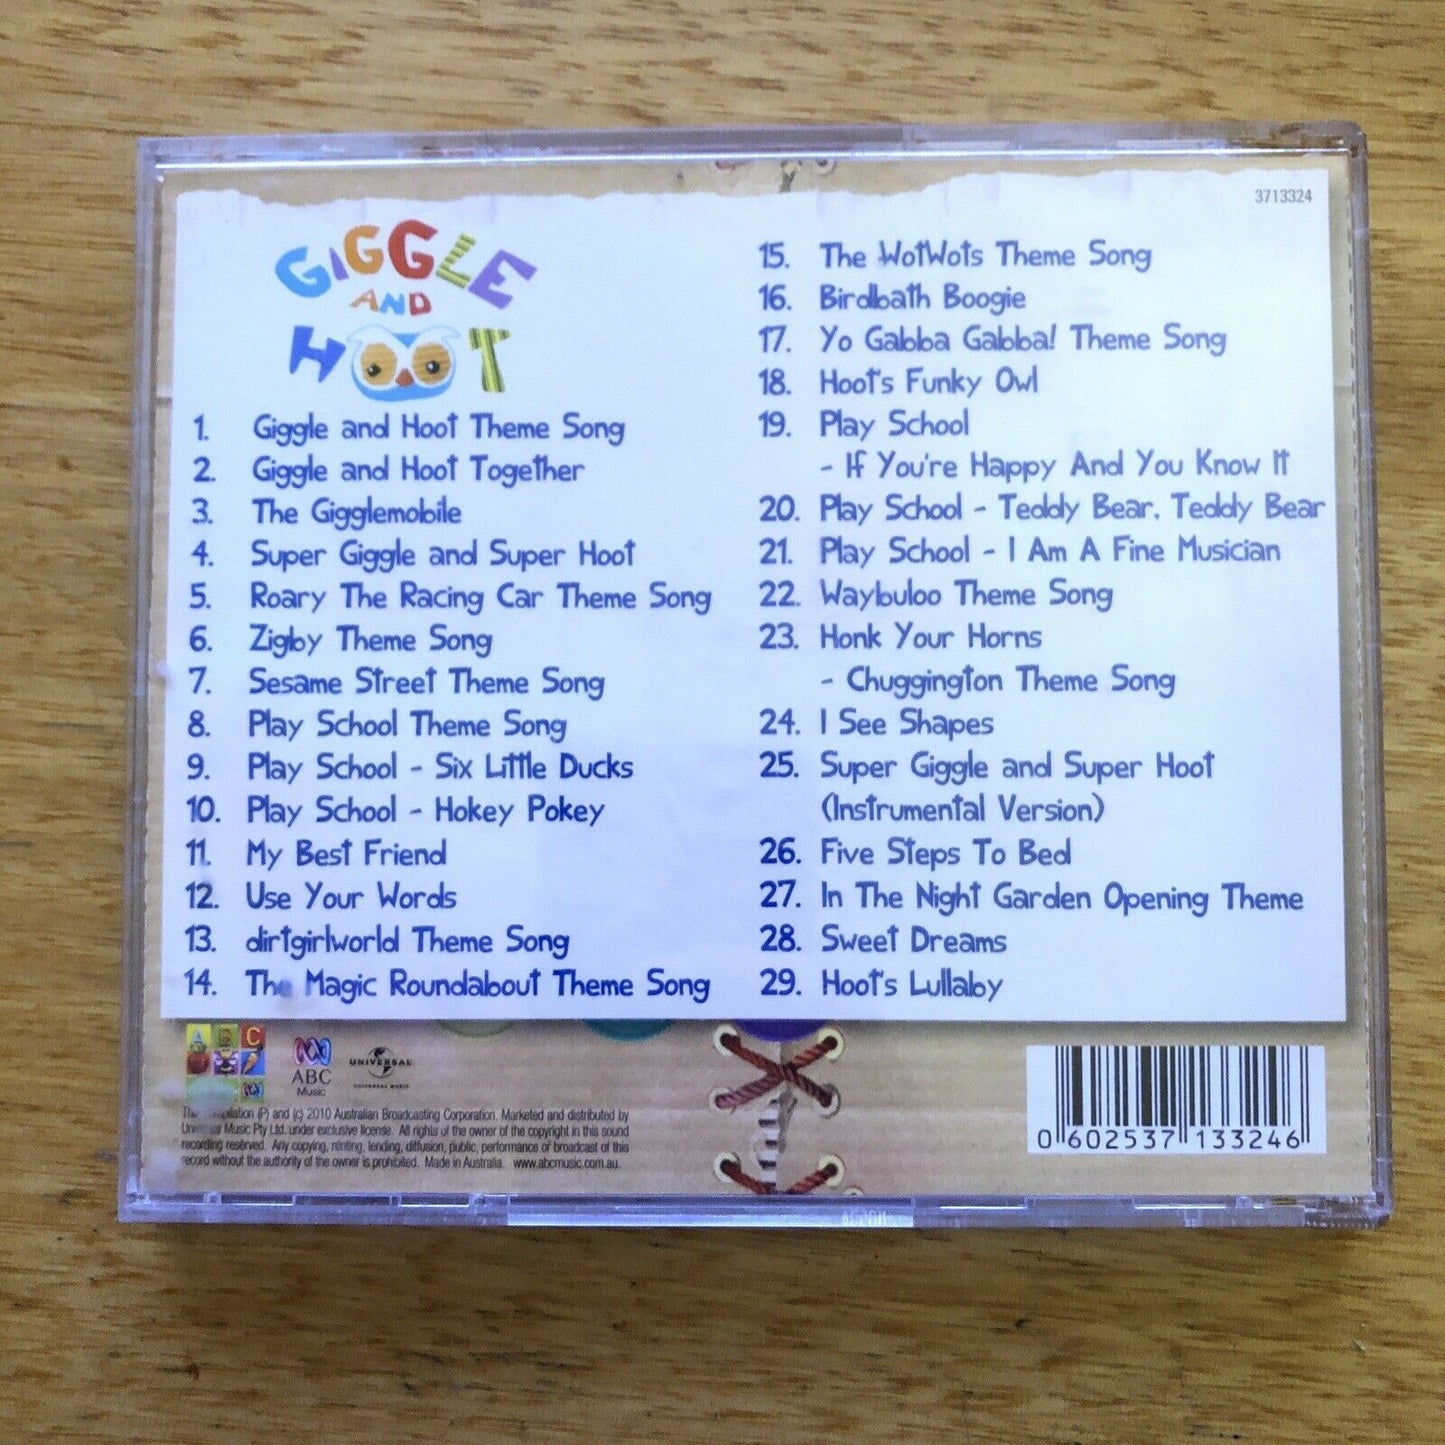 Giggle & Hoot - Beak Bopping Tunes (CD, 2010) Album